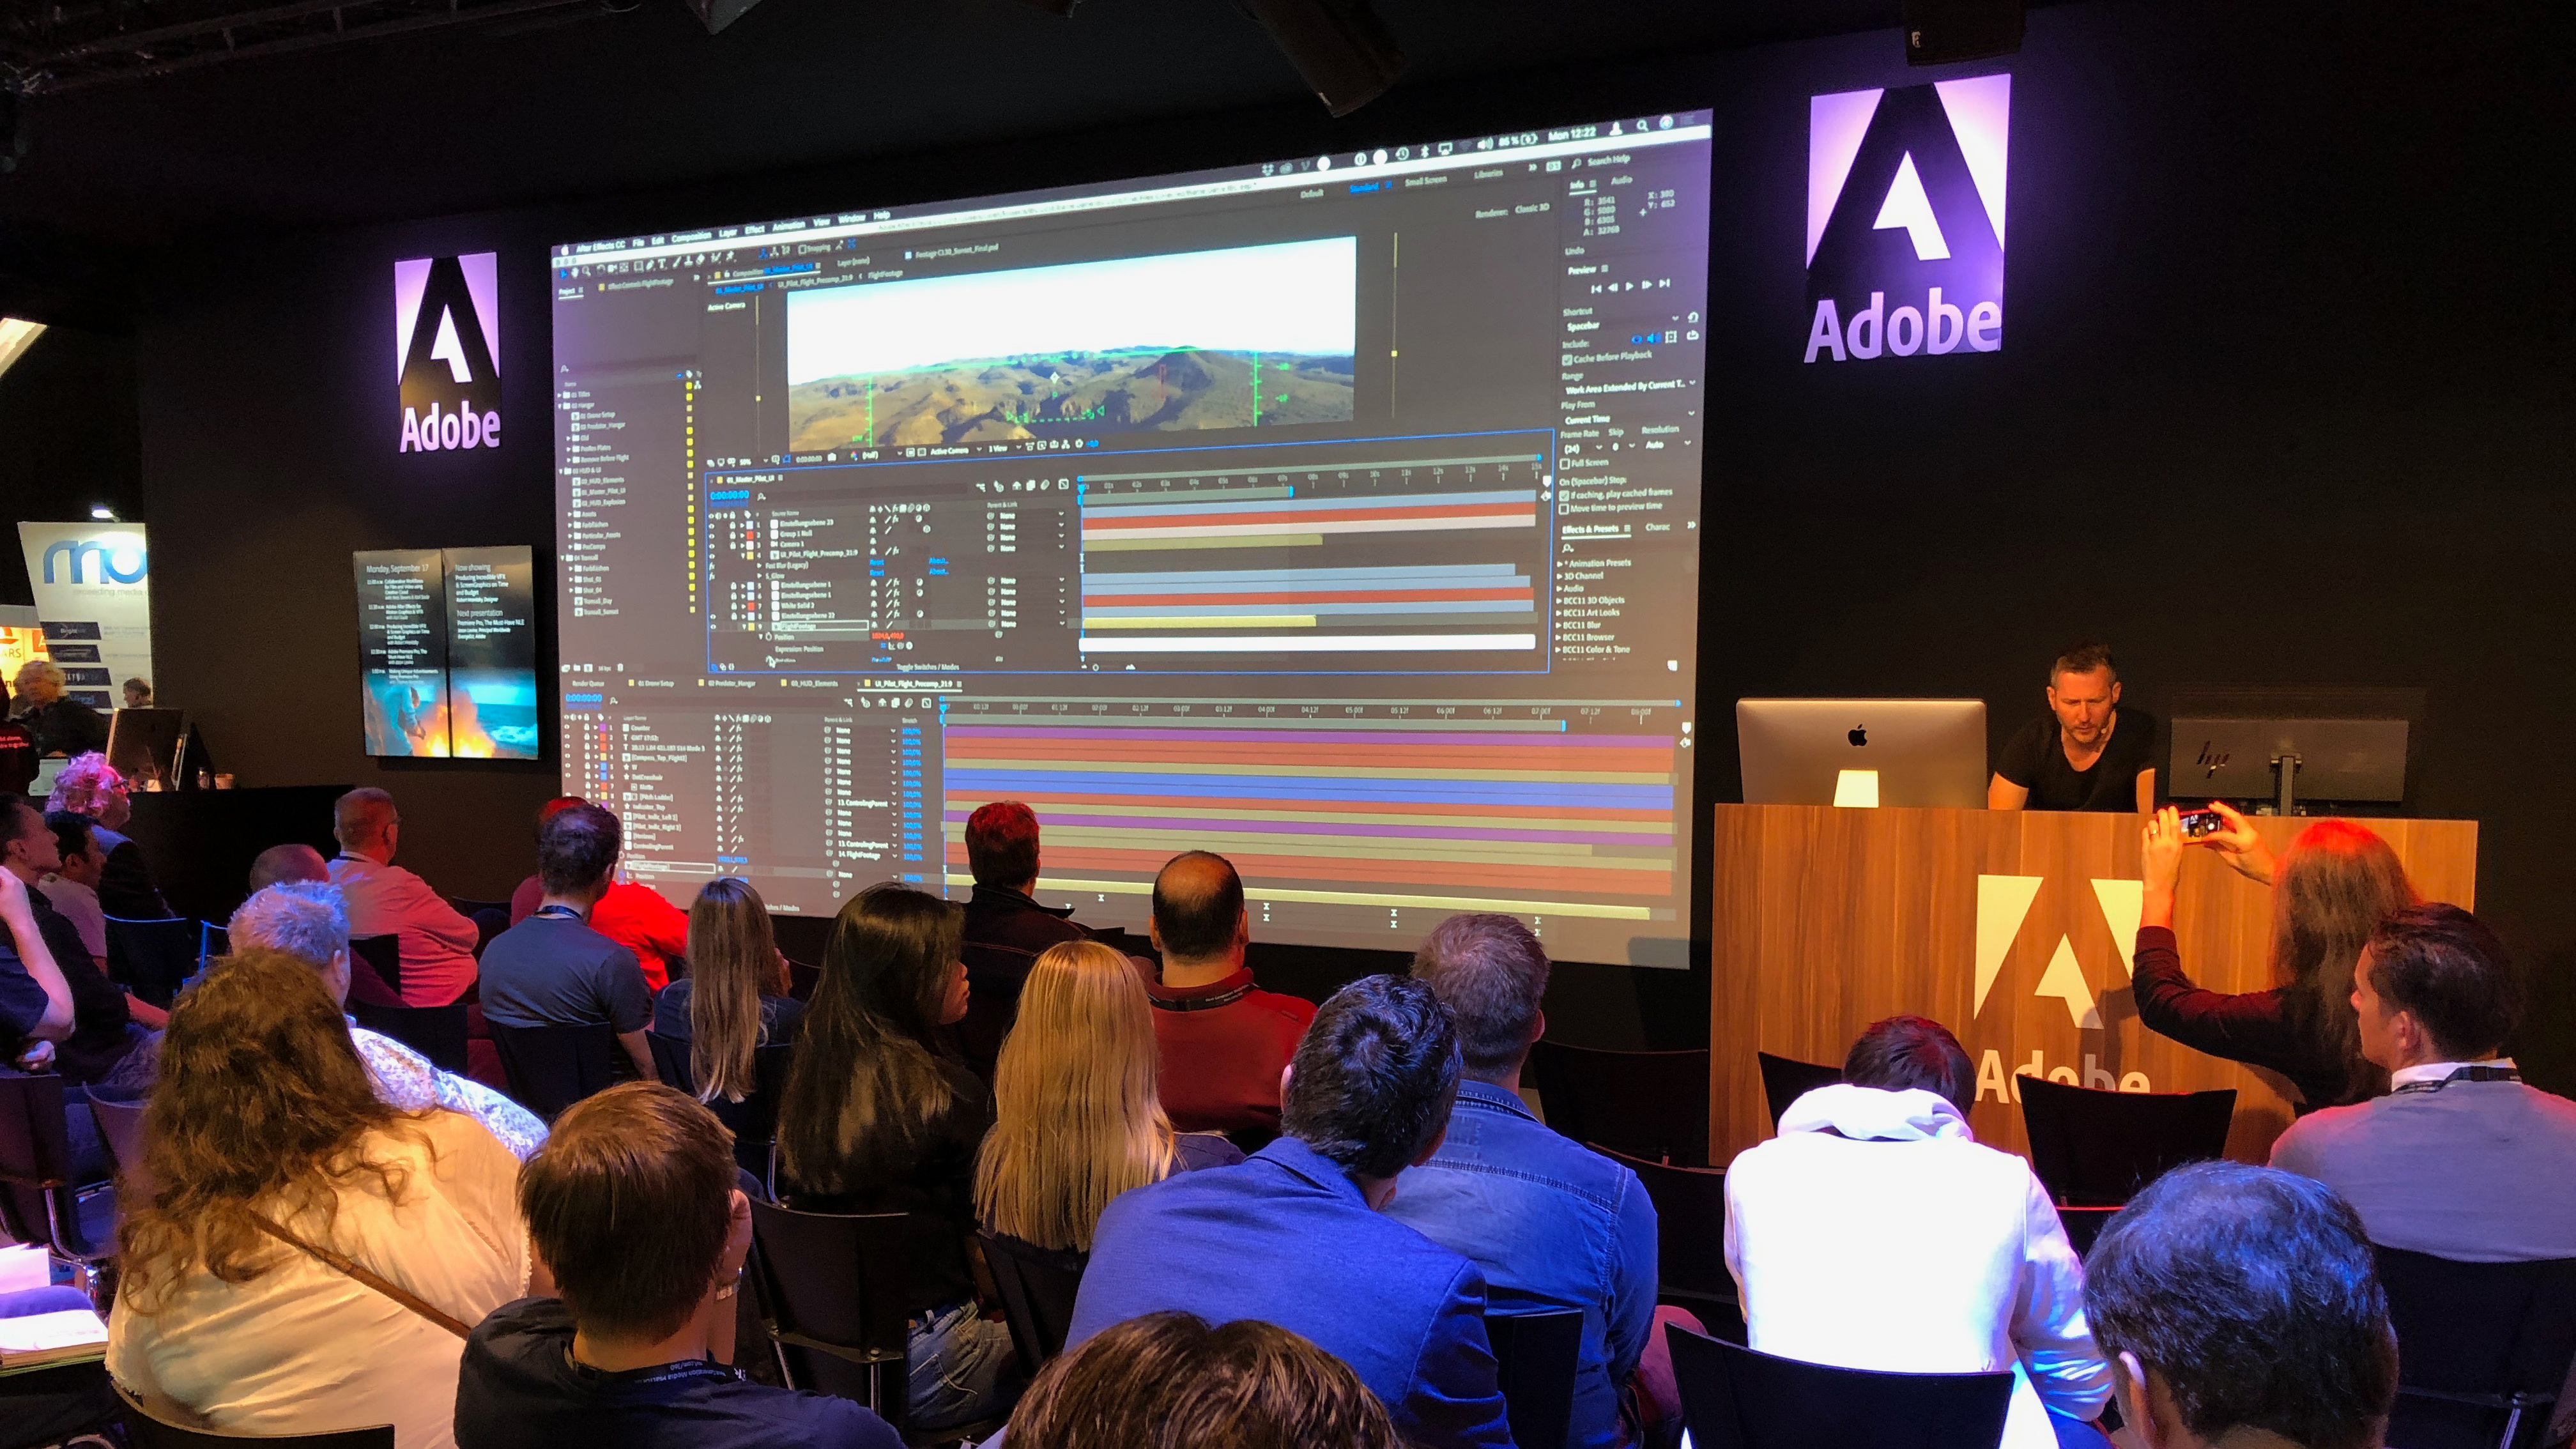 Presentation at Adobe booth